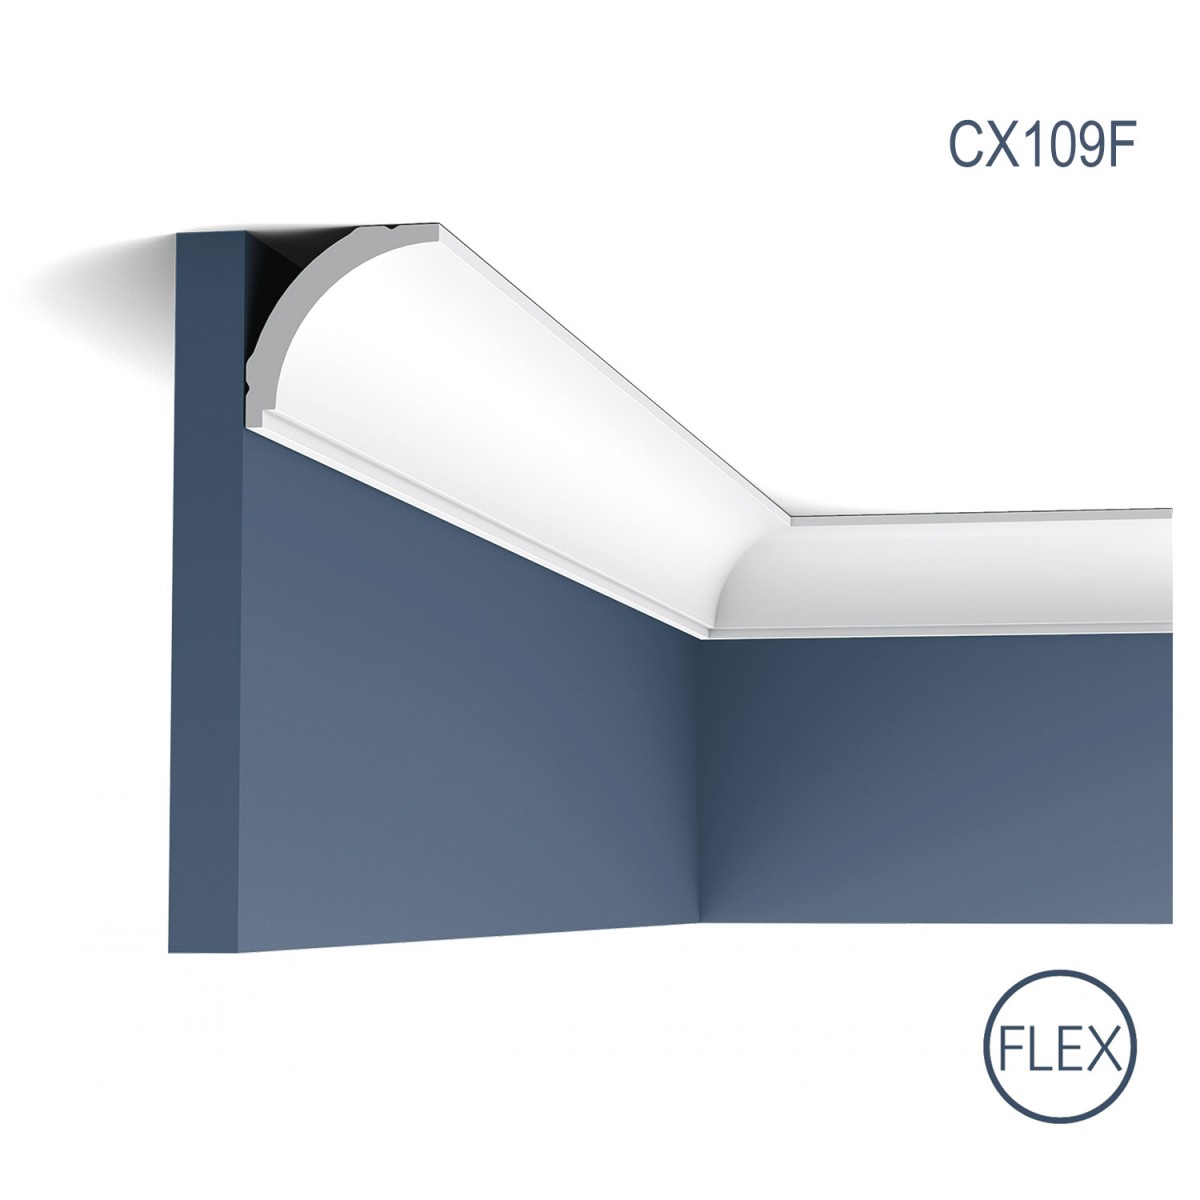 Profile Decorative Orac Decor ORC-CX109F, material: Poliuretan rigid